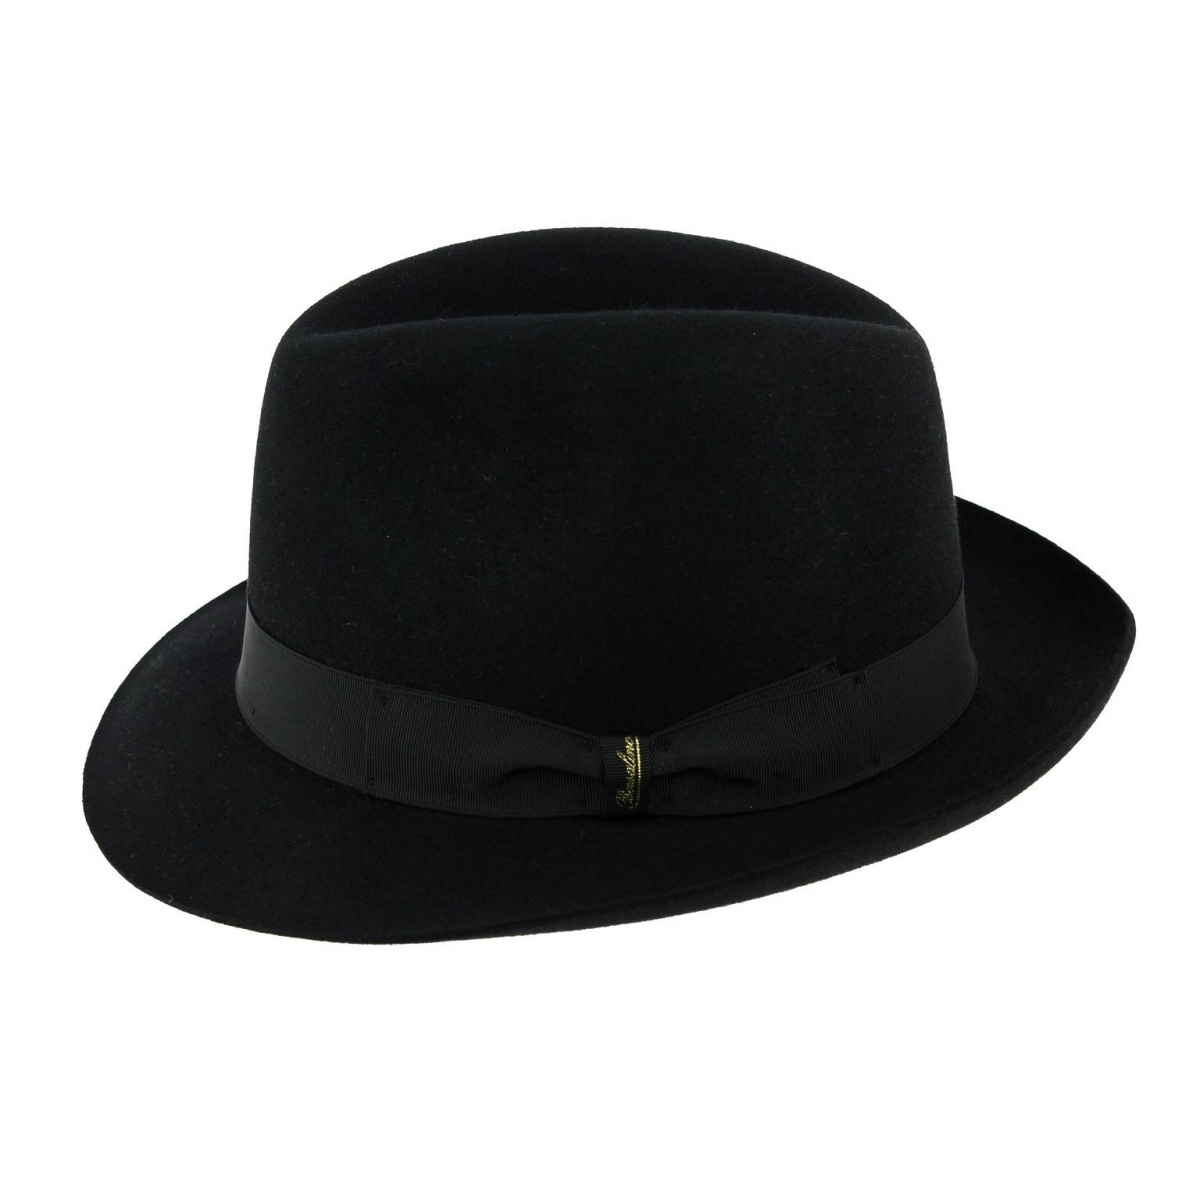 Borsalino - classic borsalino hat felt hat borsalino hair - borsalino man Reference : 295 Chapellerie Traclet